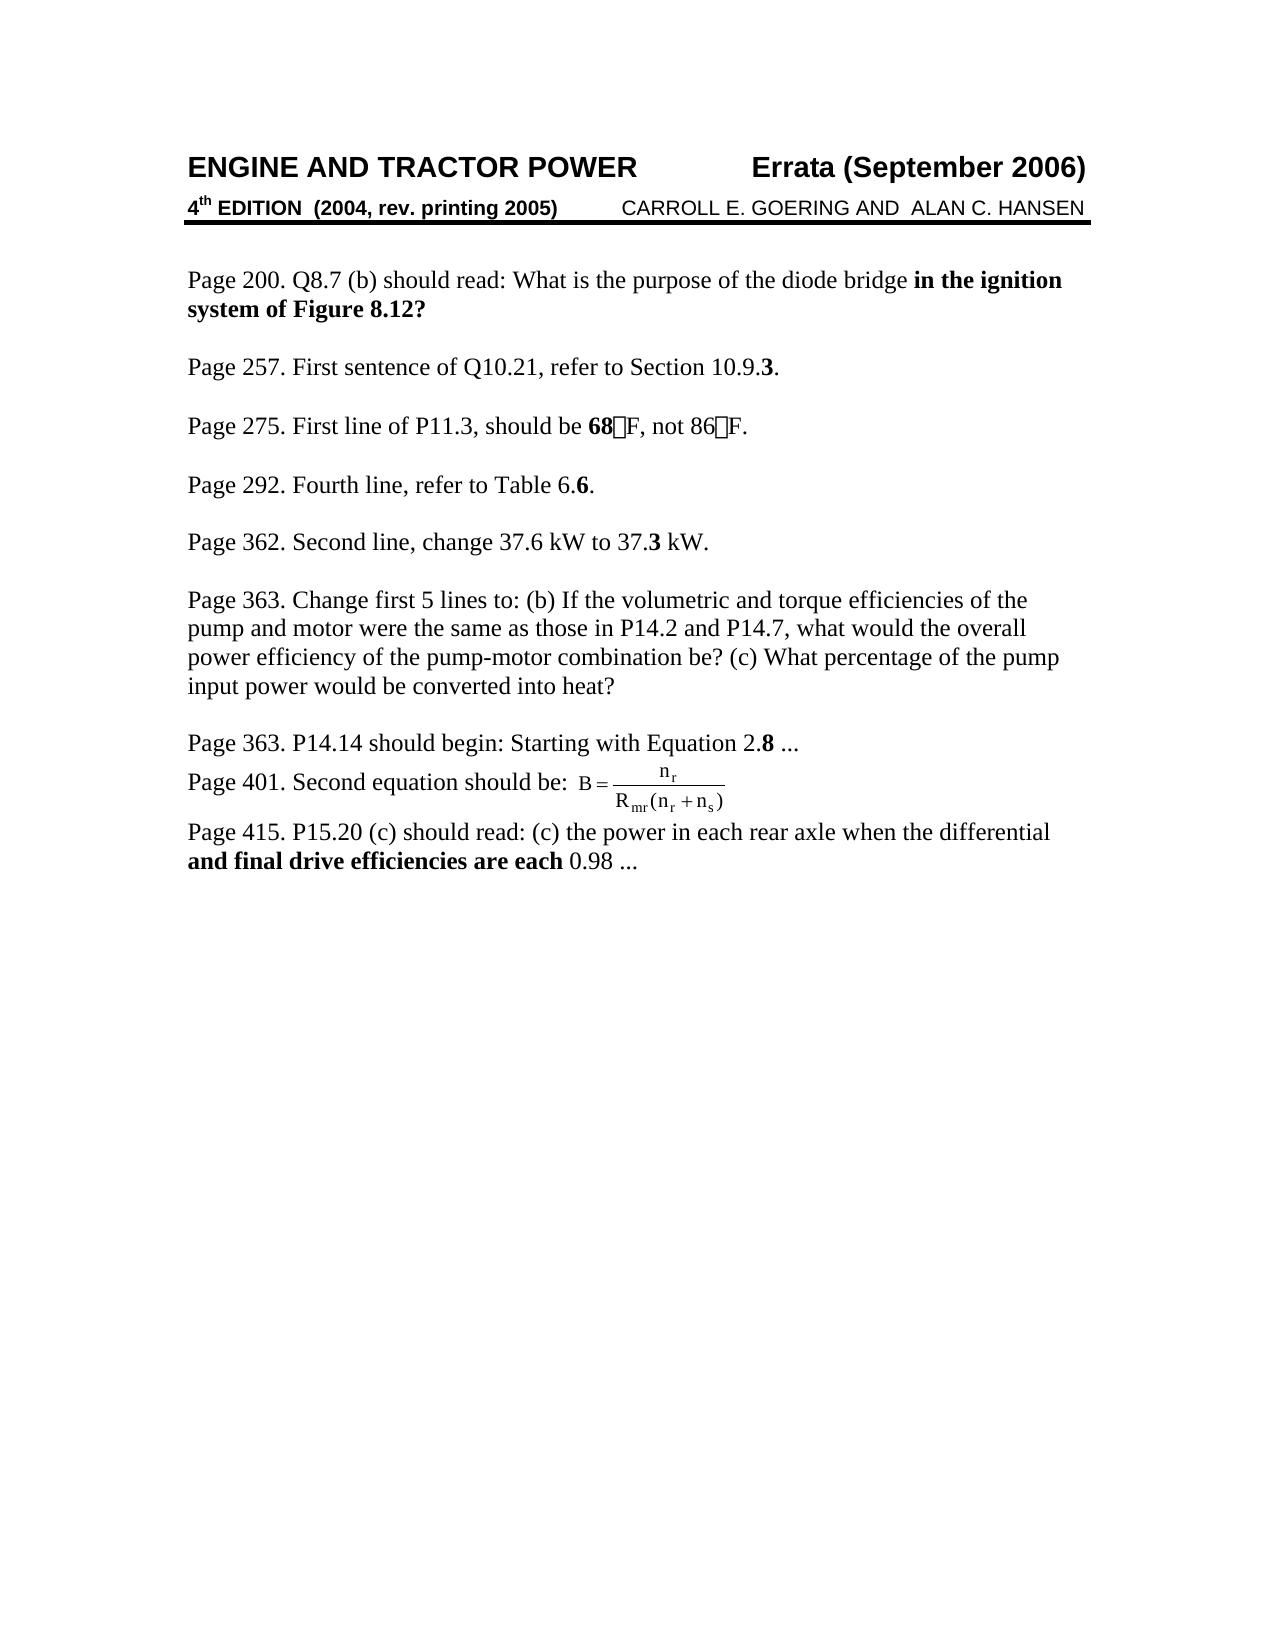 Microsoft Word - Errata Eng Tract Power Sept 2006.doc